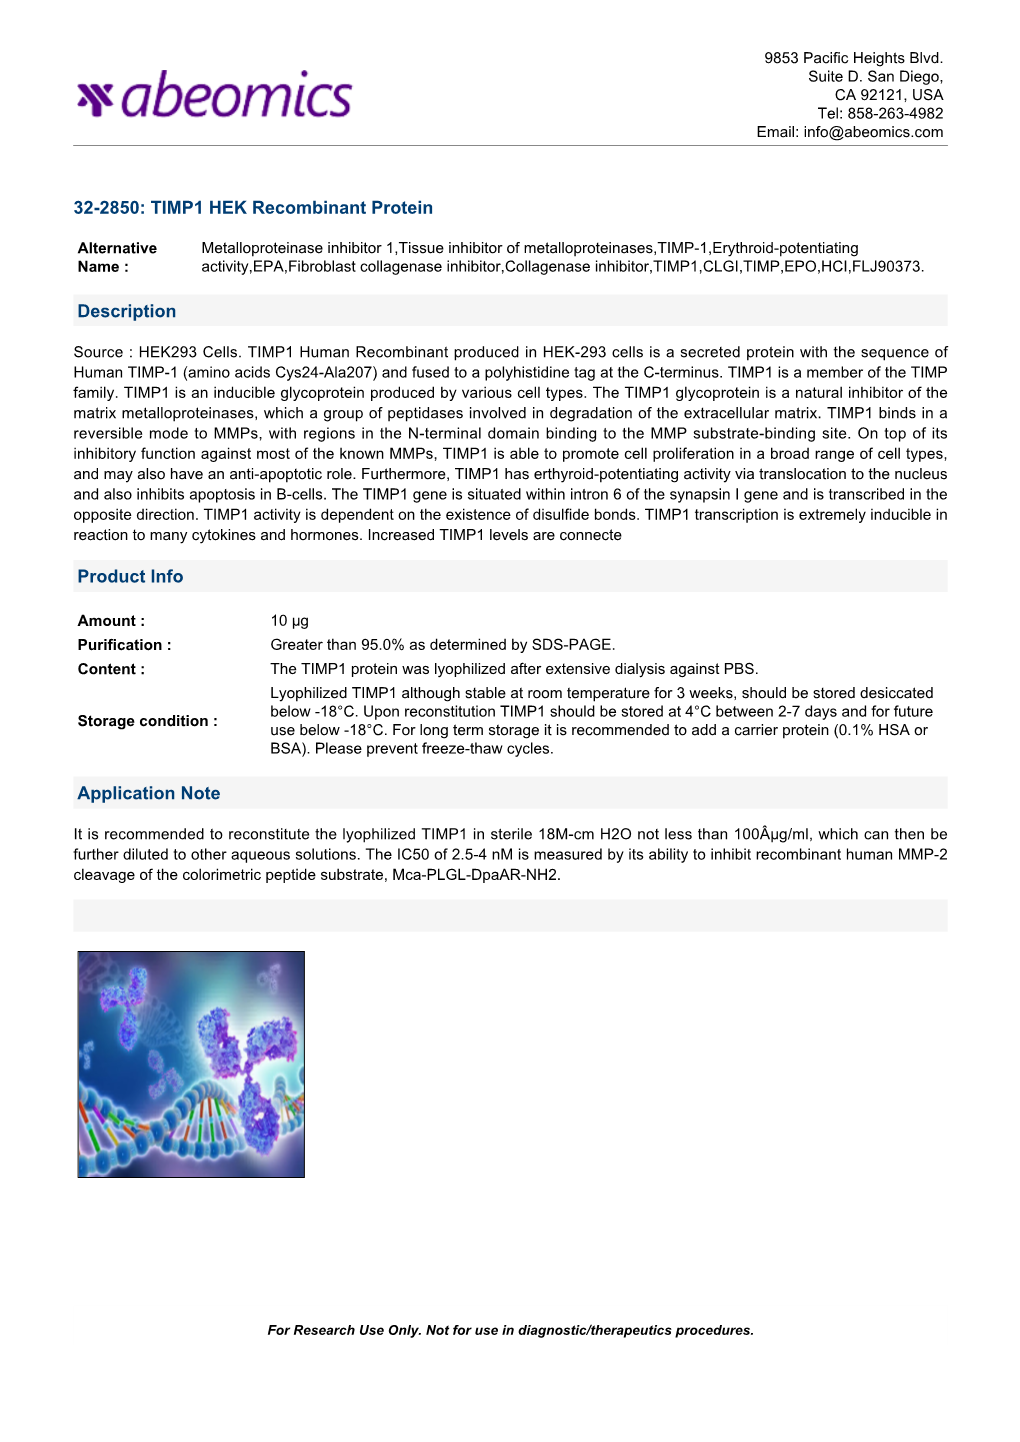 32-2850: TIMP1 HEK Recombinant Protein Description